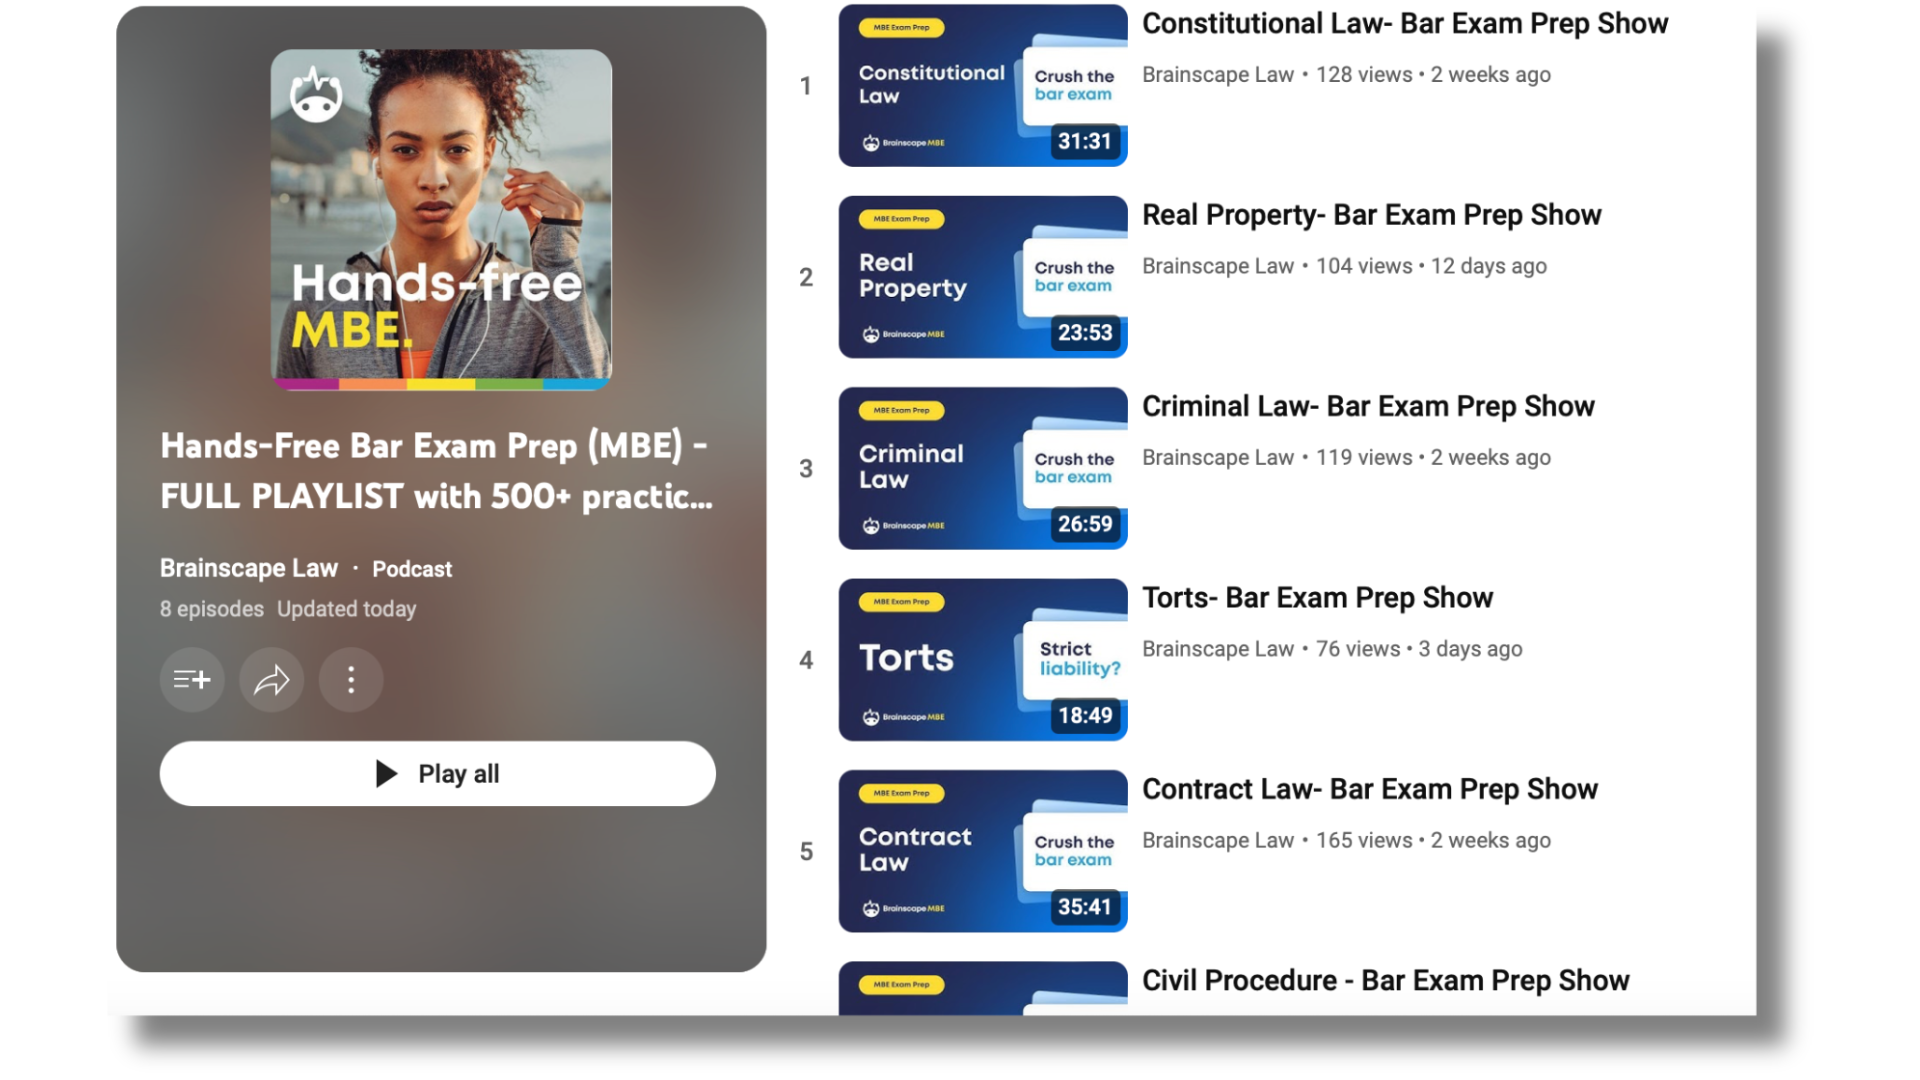 Brainscape Law's bar exam prep videos